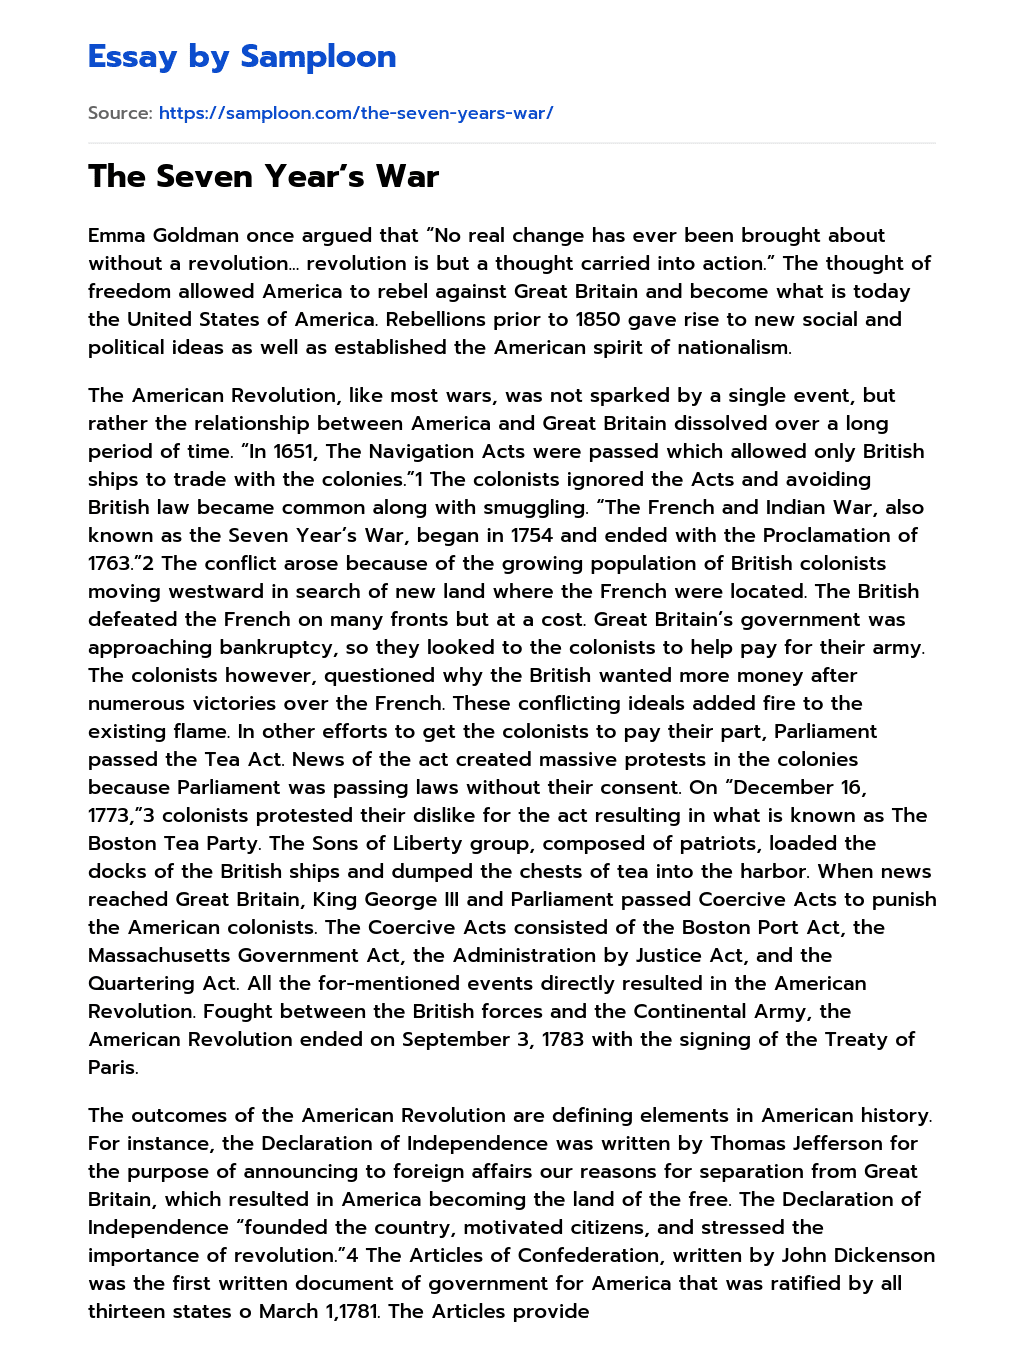 The Seven Year’s War essay